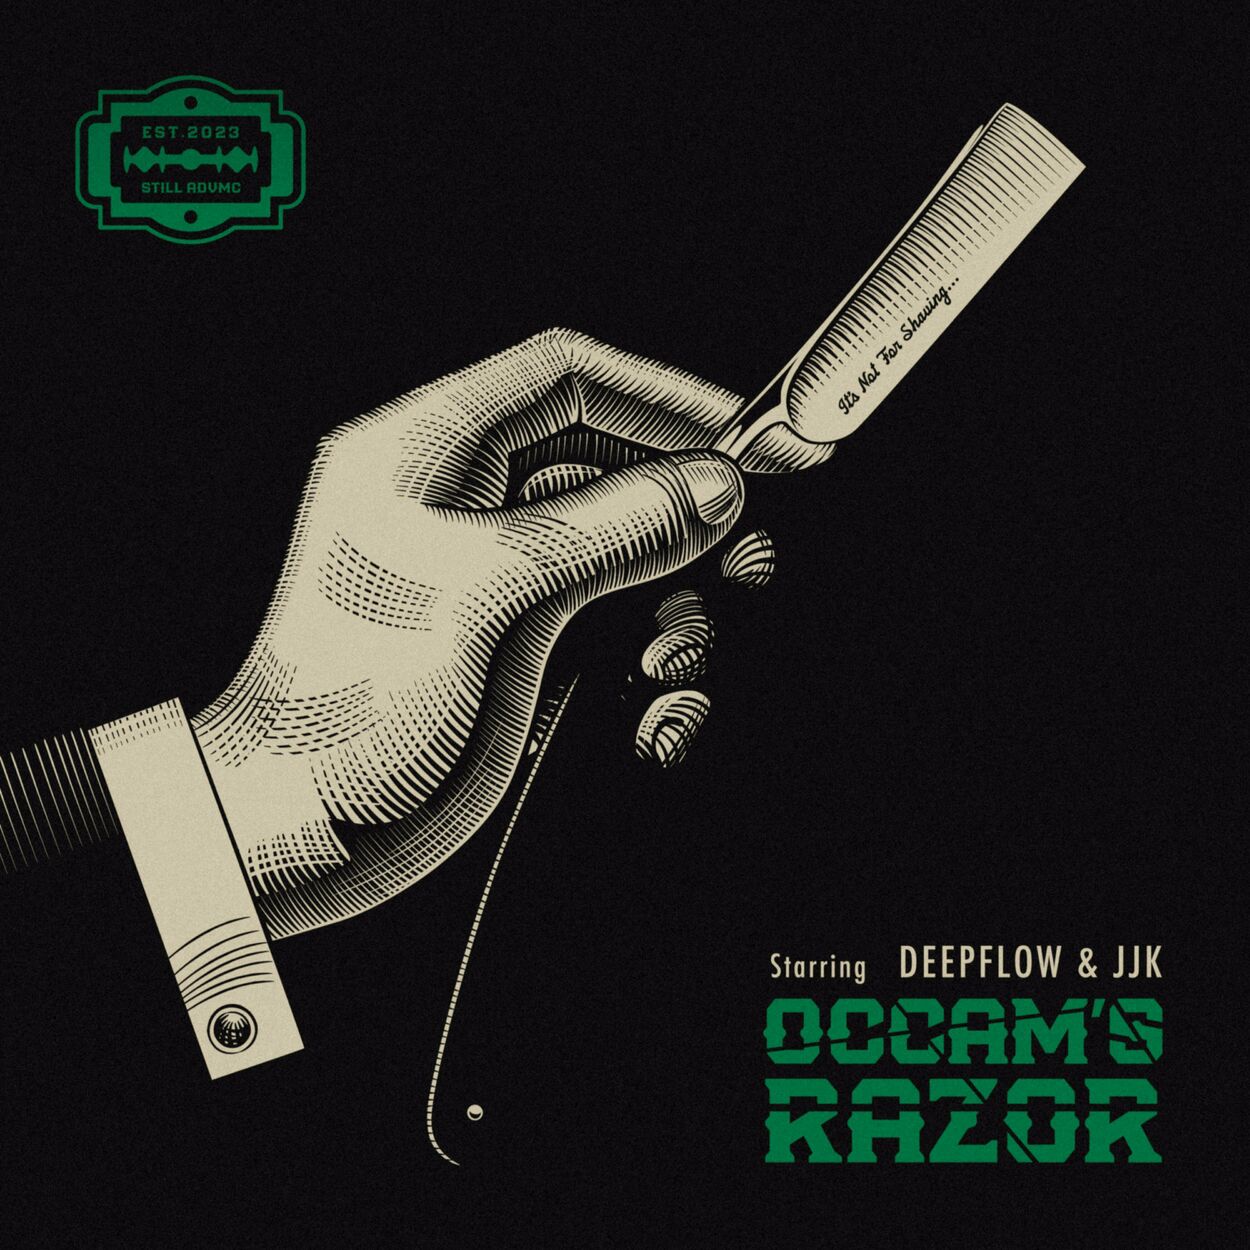 Deepflow, JJK – Occam’s Razor – EP